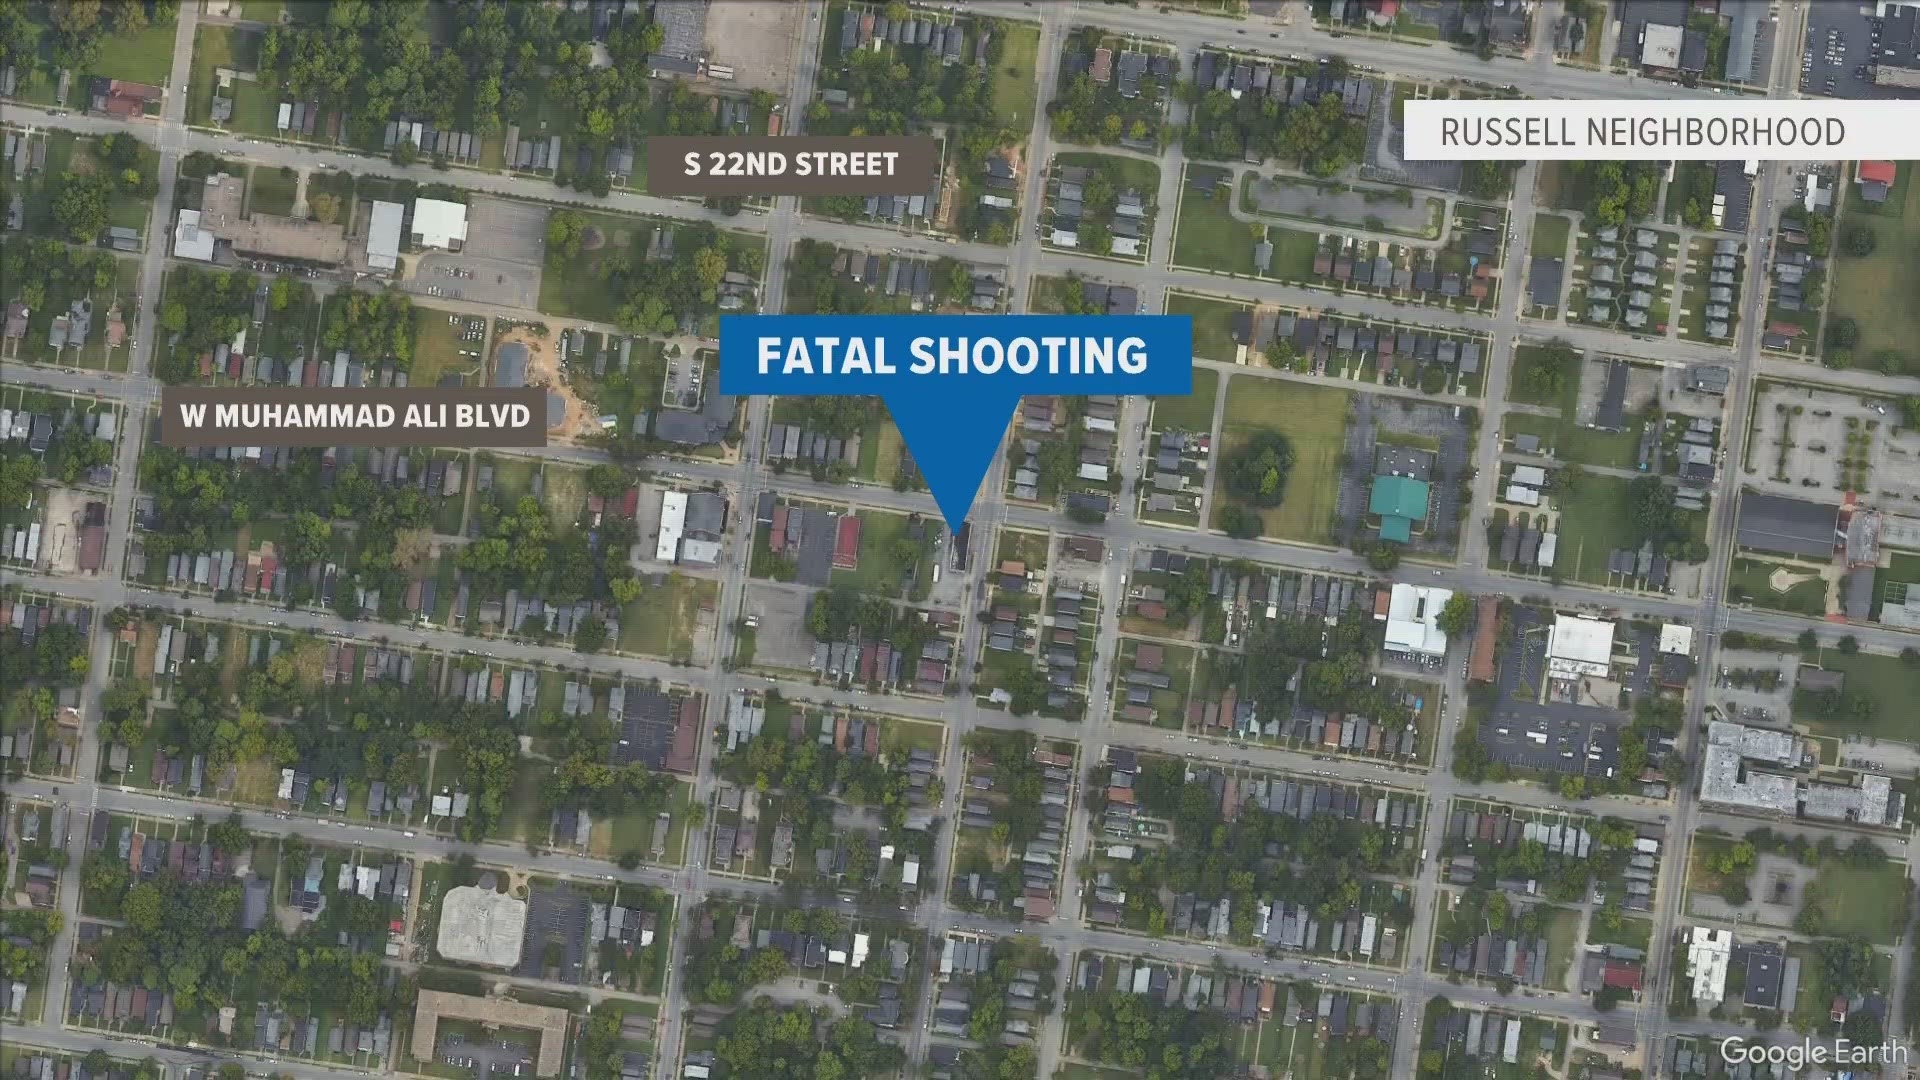 Police said the shooting happened on West Muhammad Ali Boulevard.